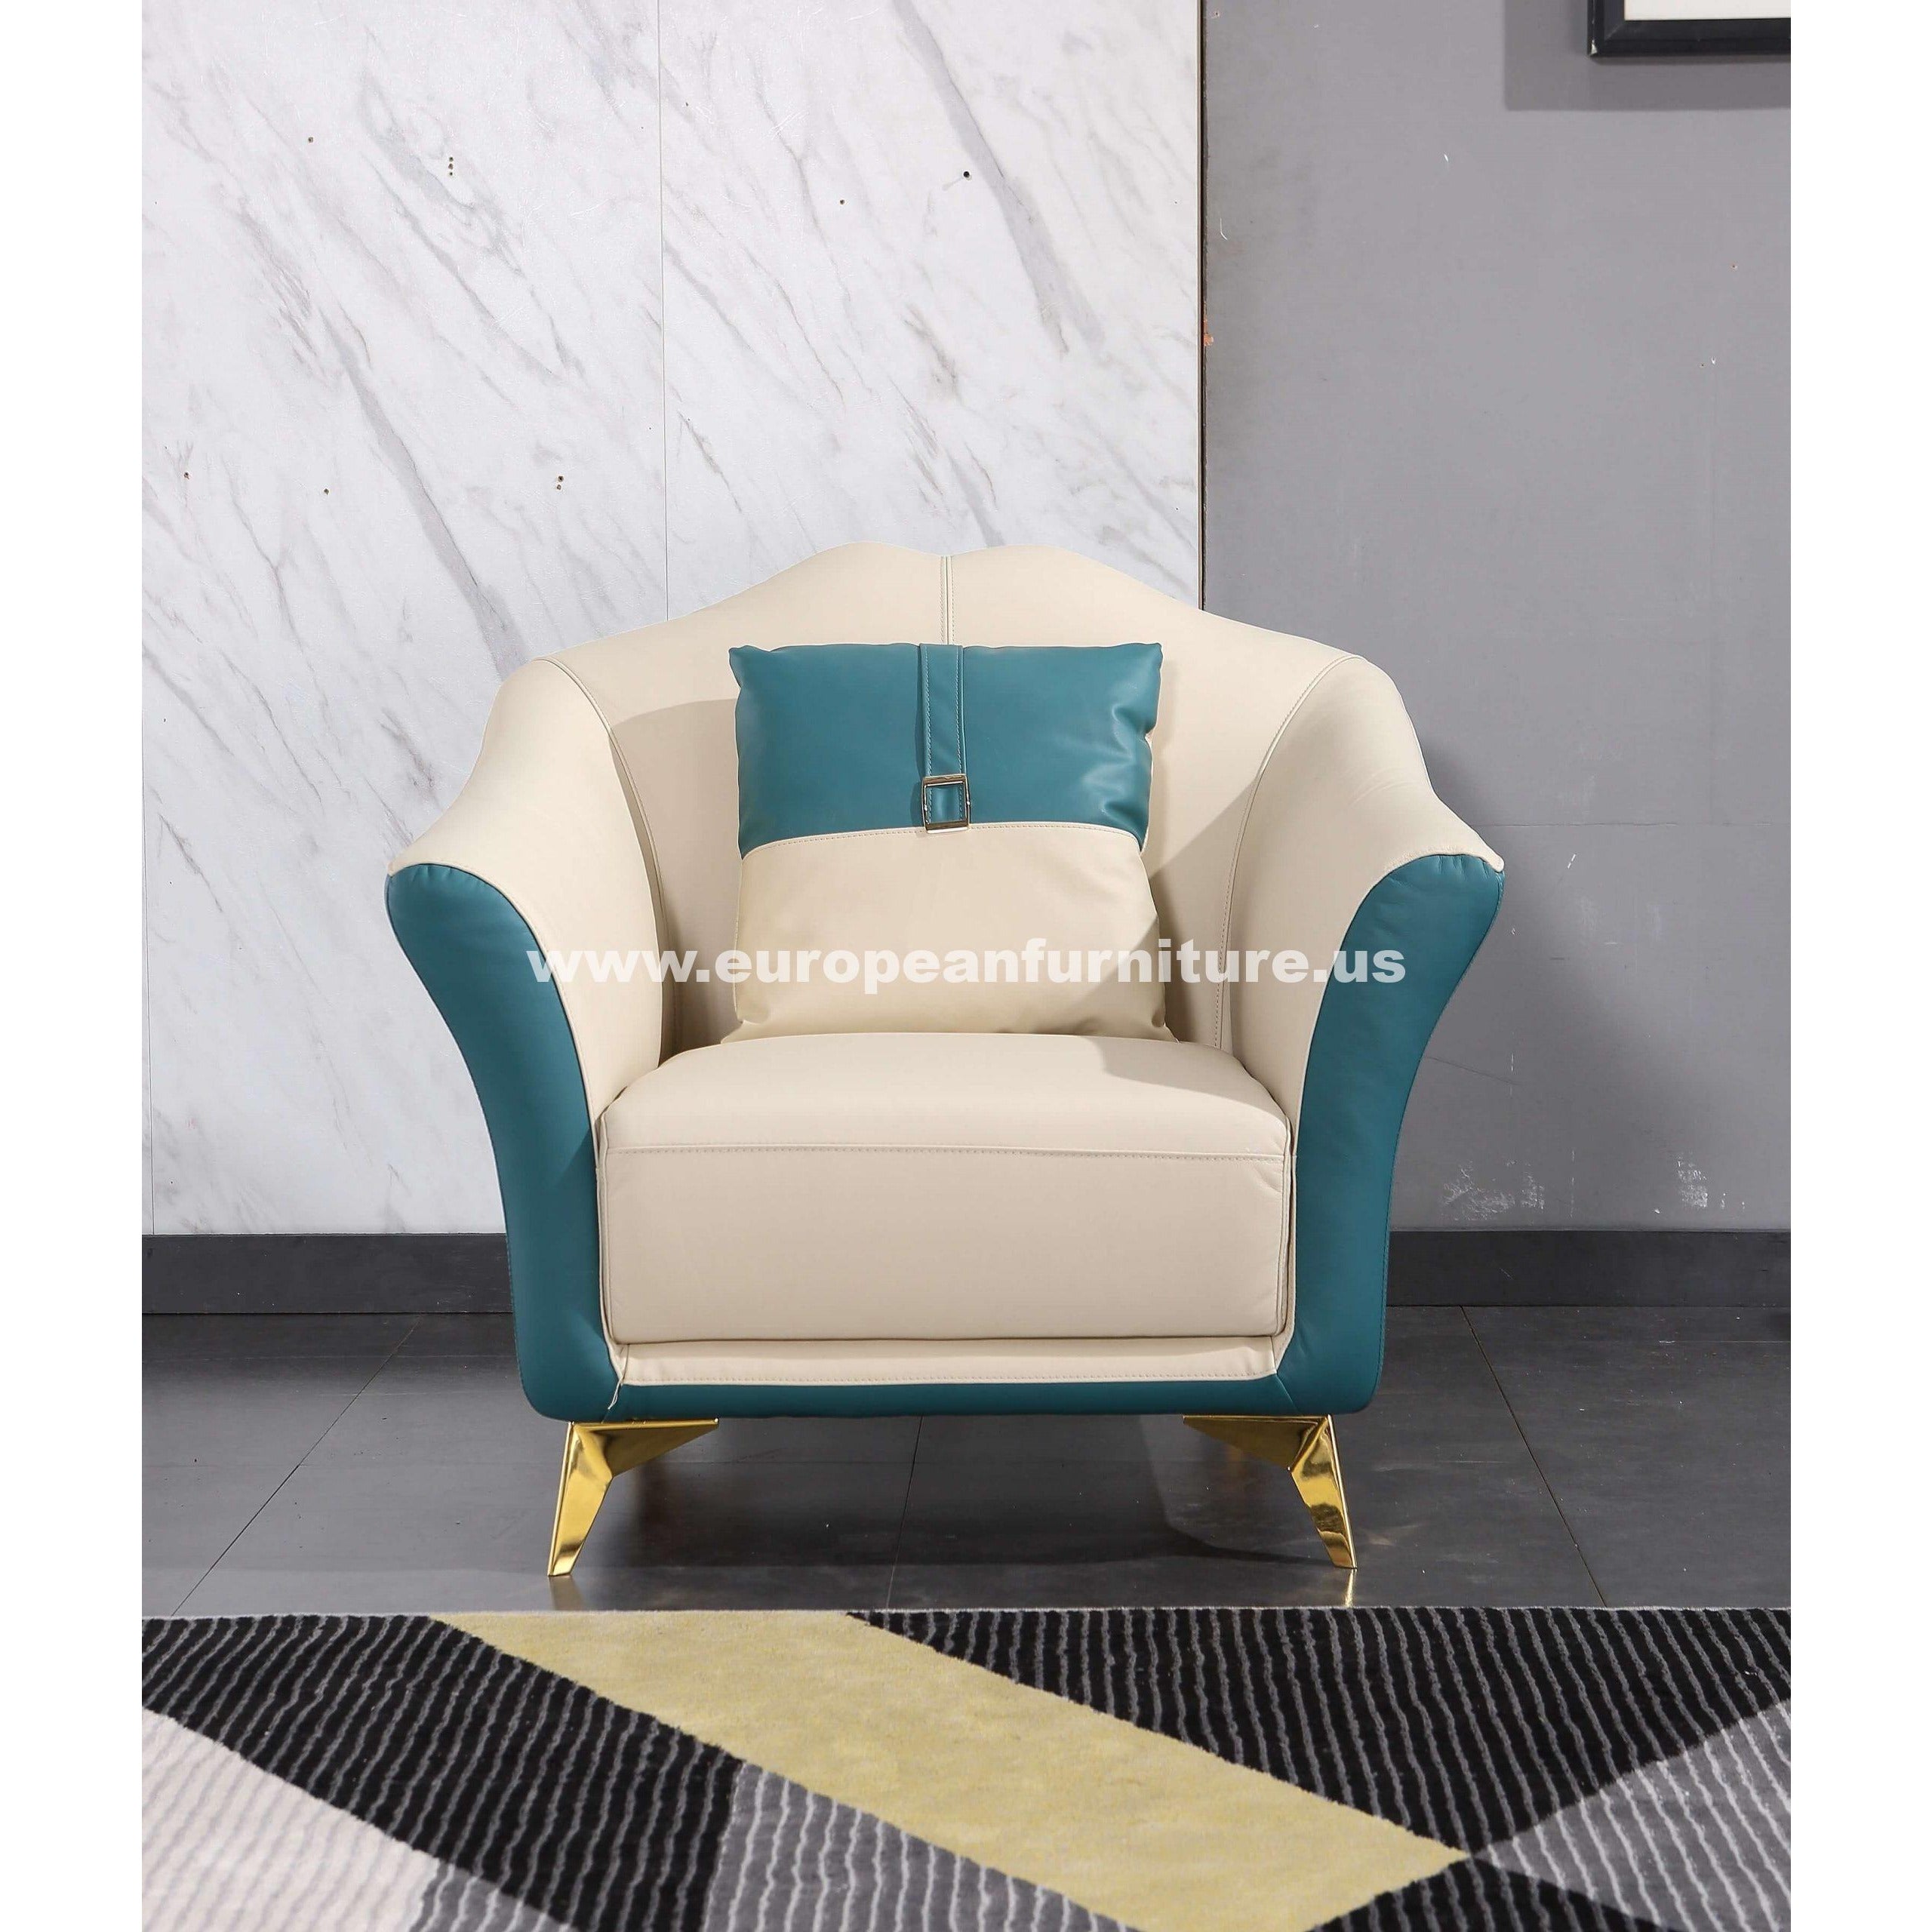 European Furniture - Winston Chair White-Blue Italian Leather - EF-29052-C - New Star Living